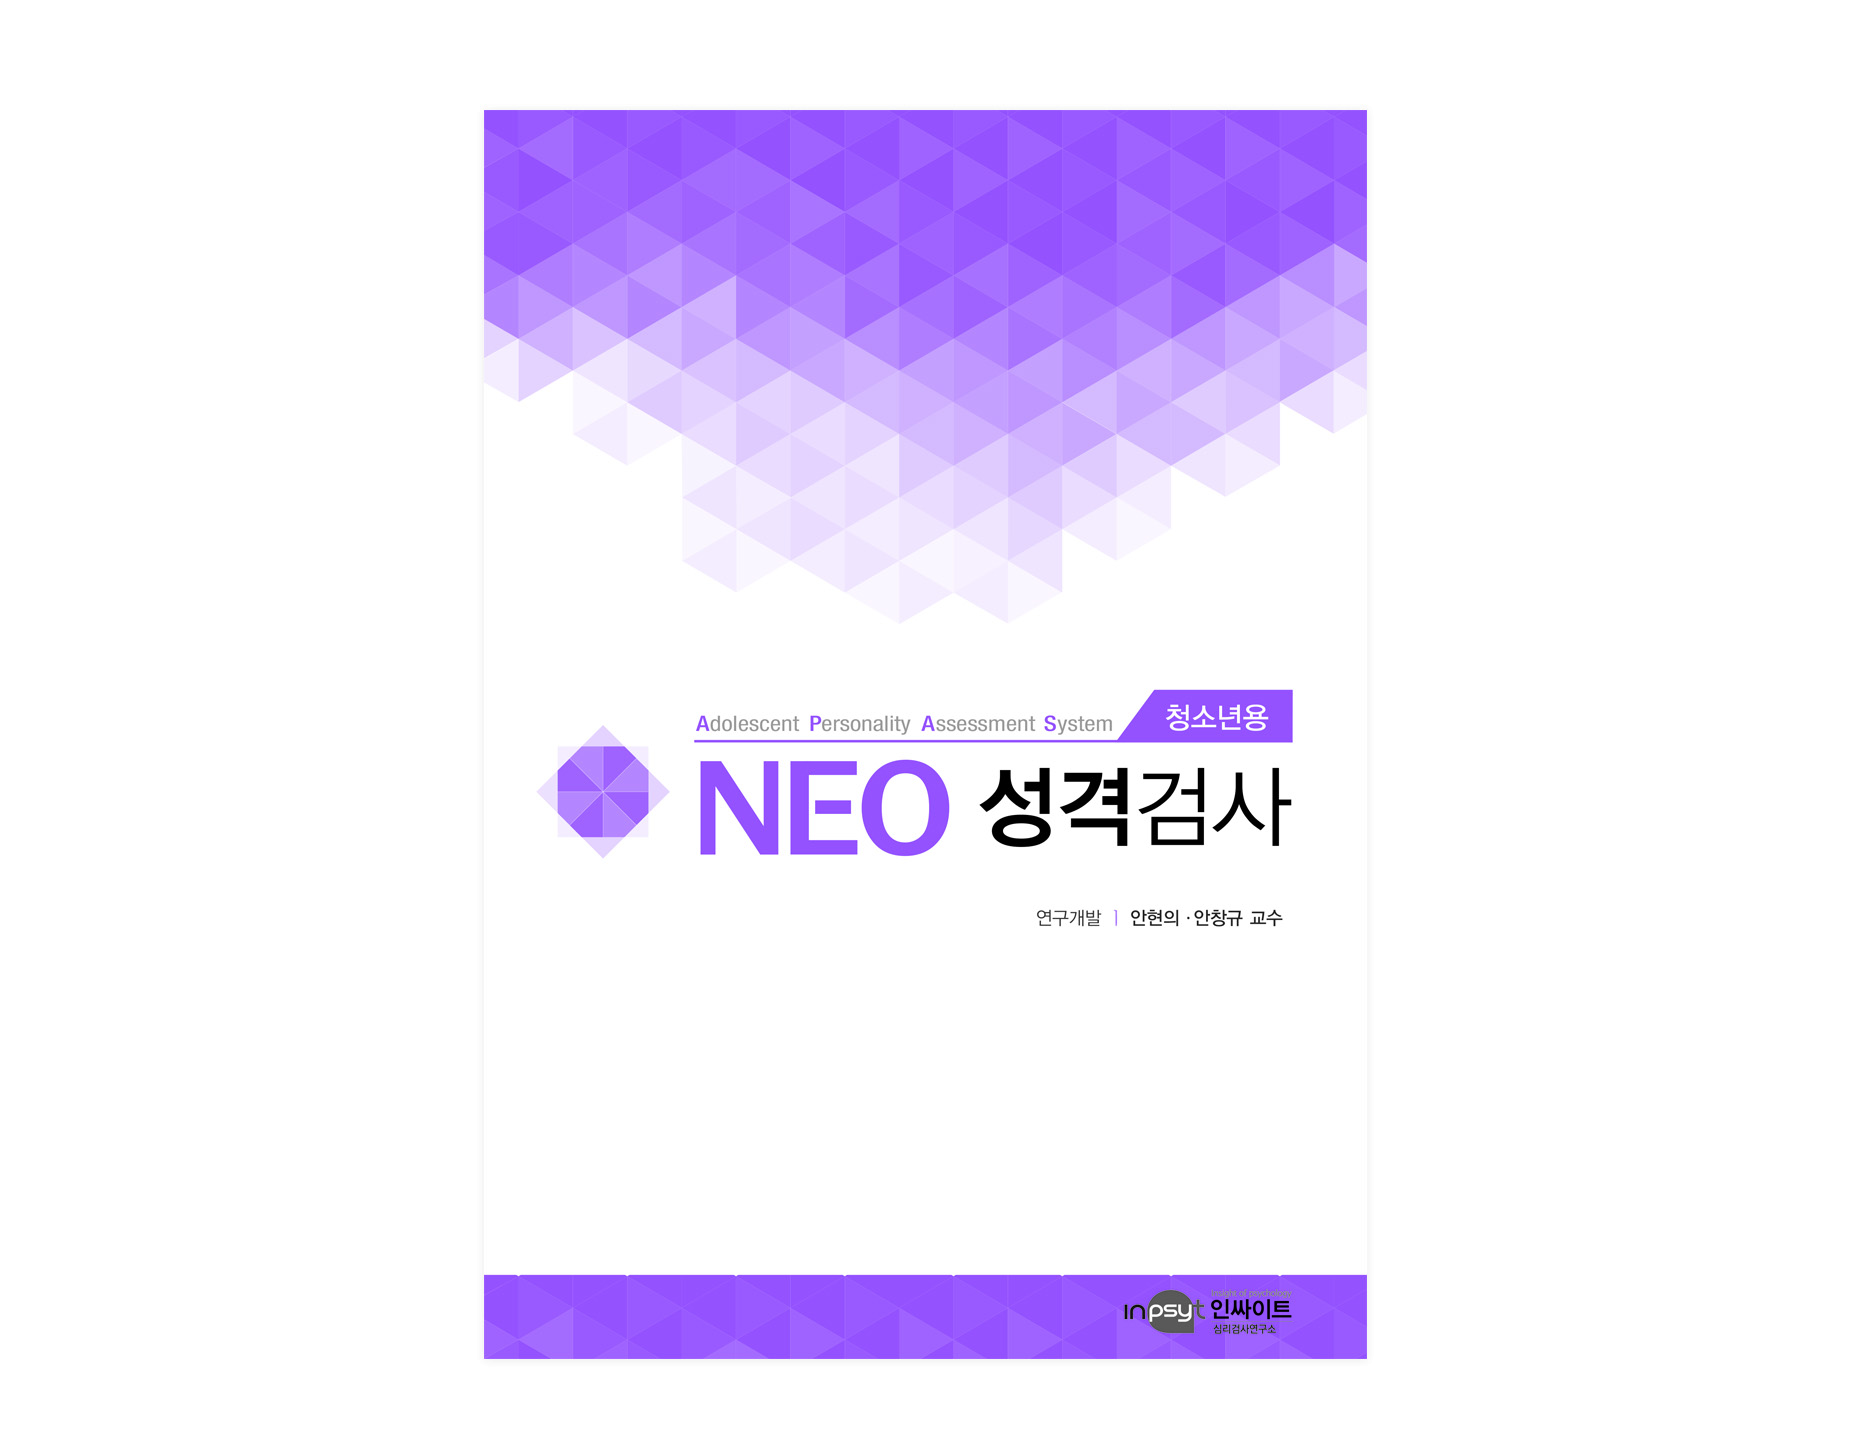 NEO-2성격검사_청소년용.jpg